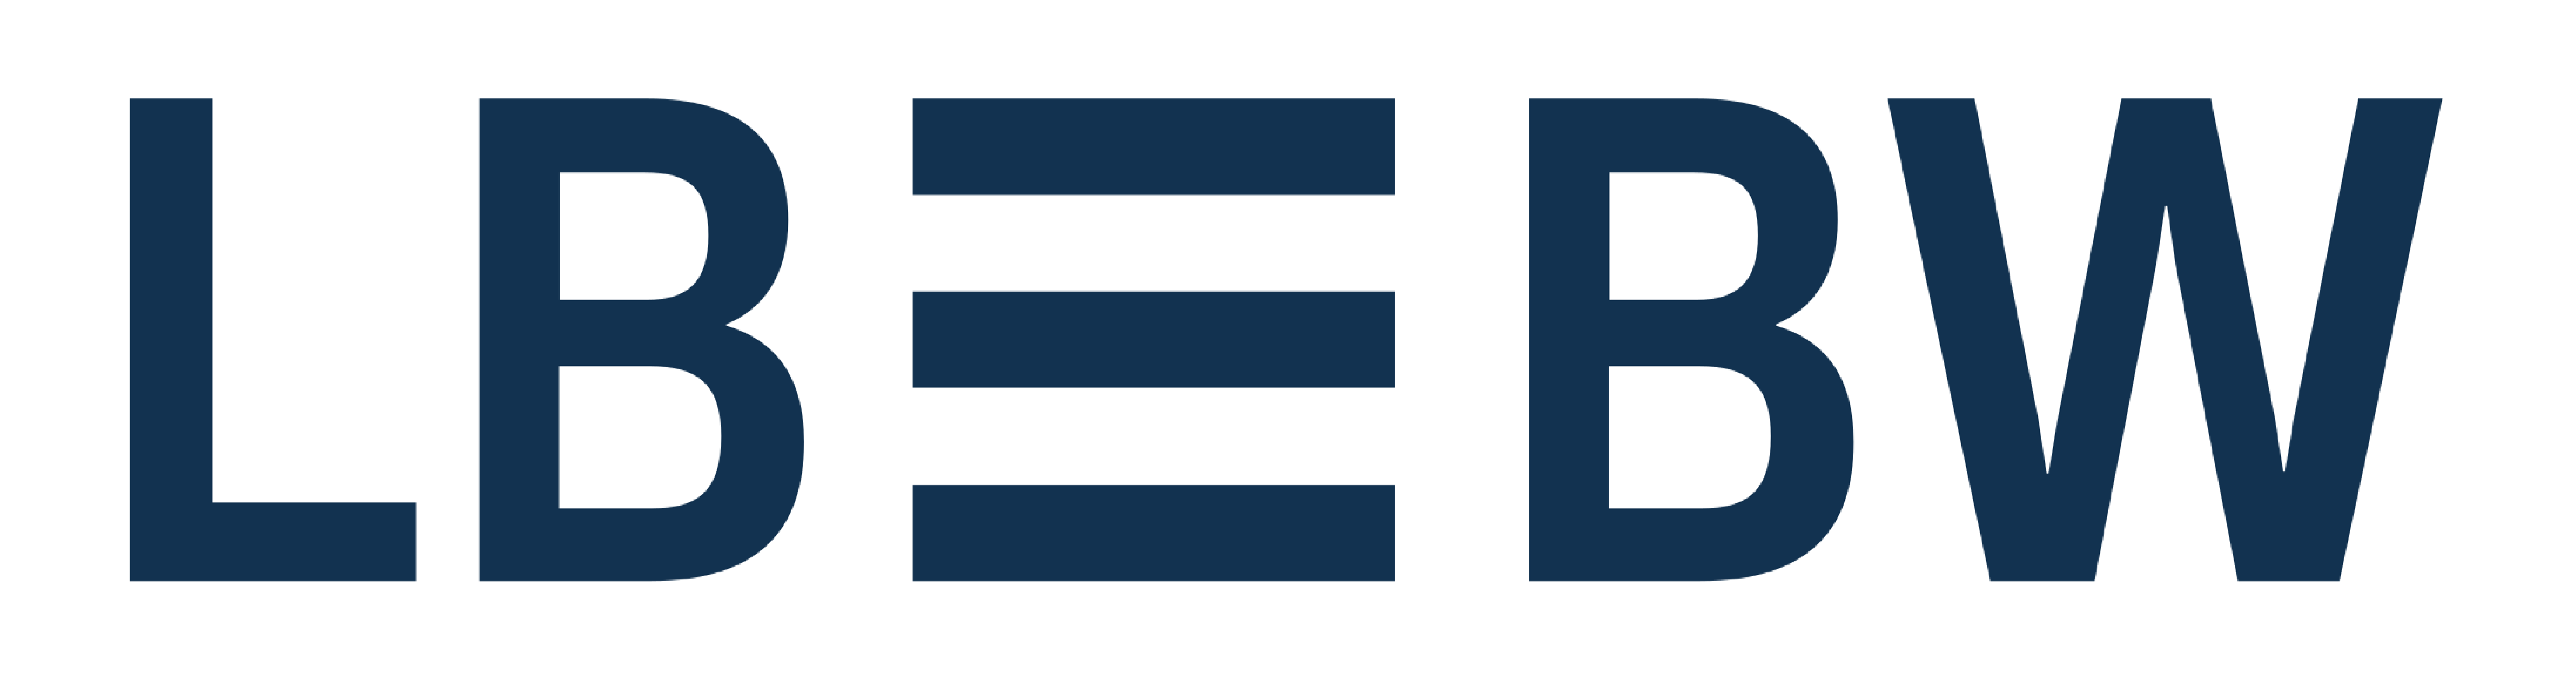 de4.0-lbbw's provider logo